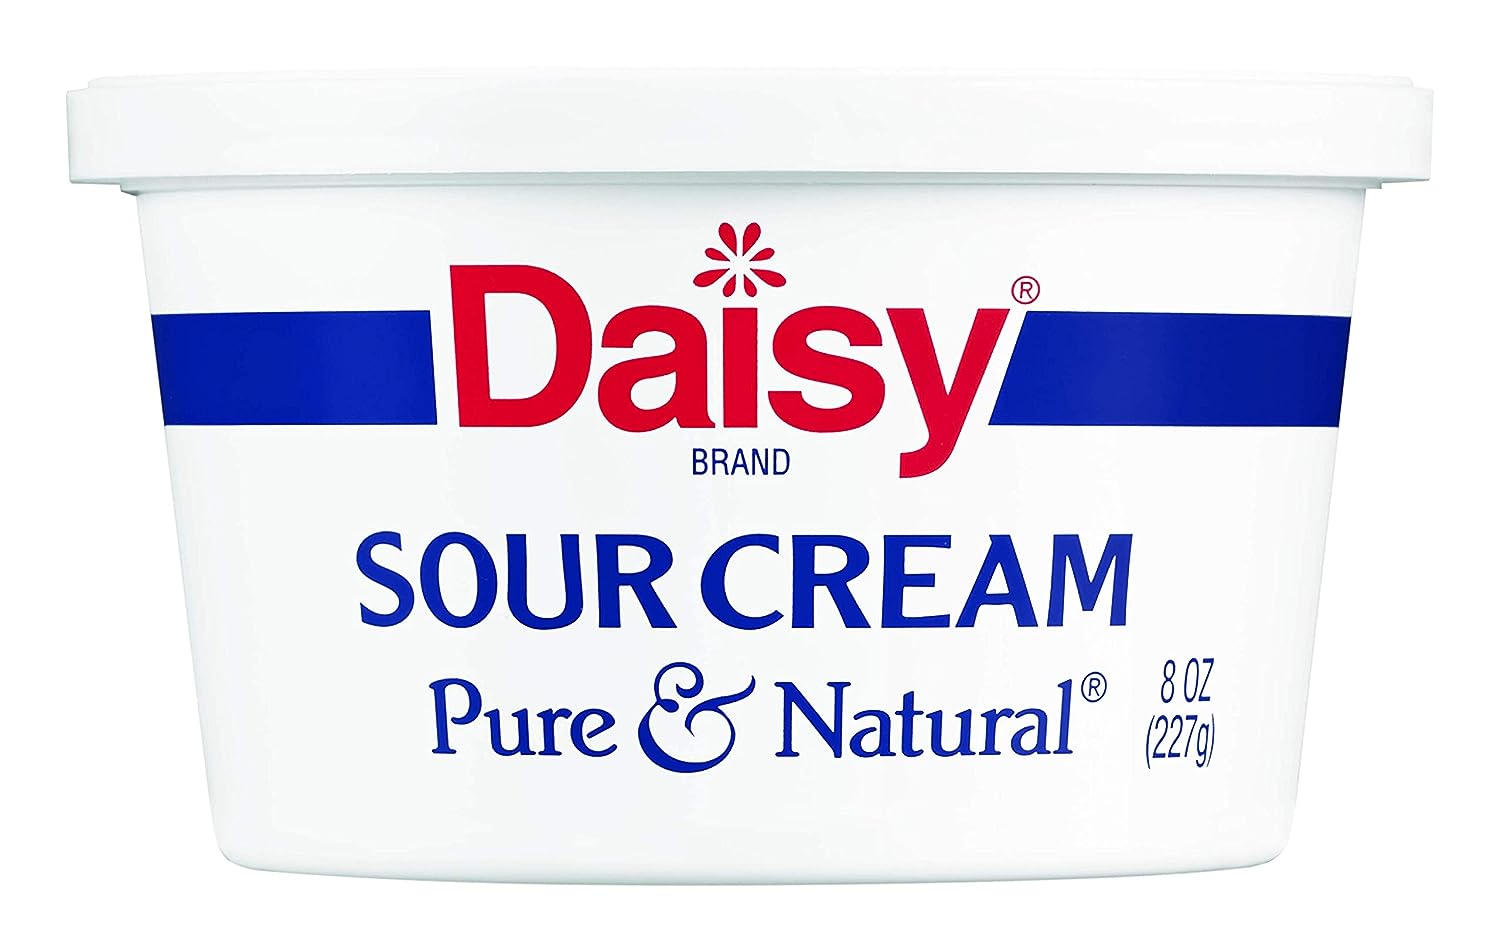 KEM CHUA THỰC VẬT TỰ NHIÊN Daisy Regular Sour Cream, ĂN KIÊNG Kosher, 227g